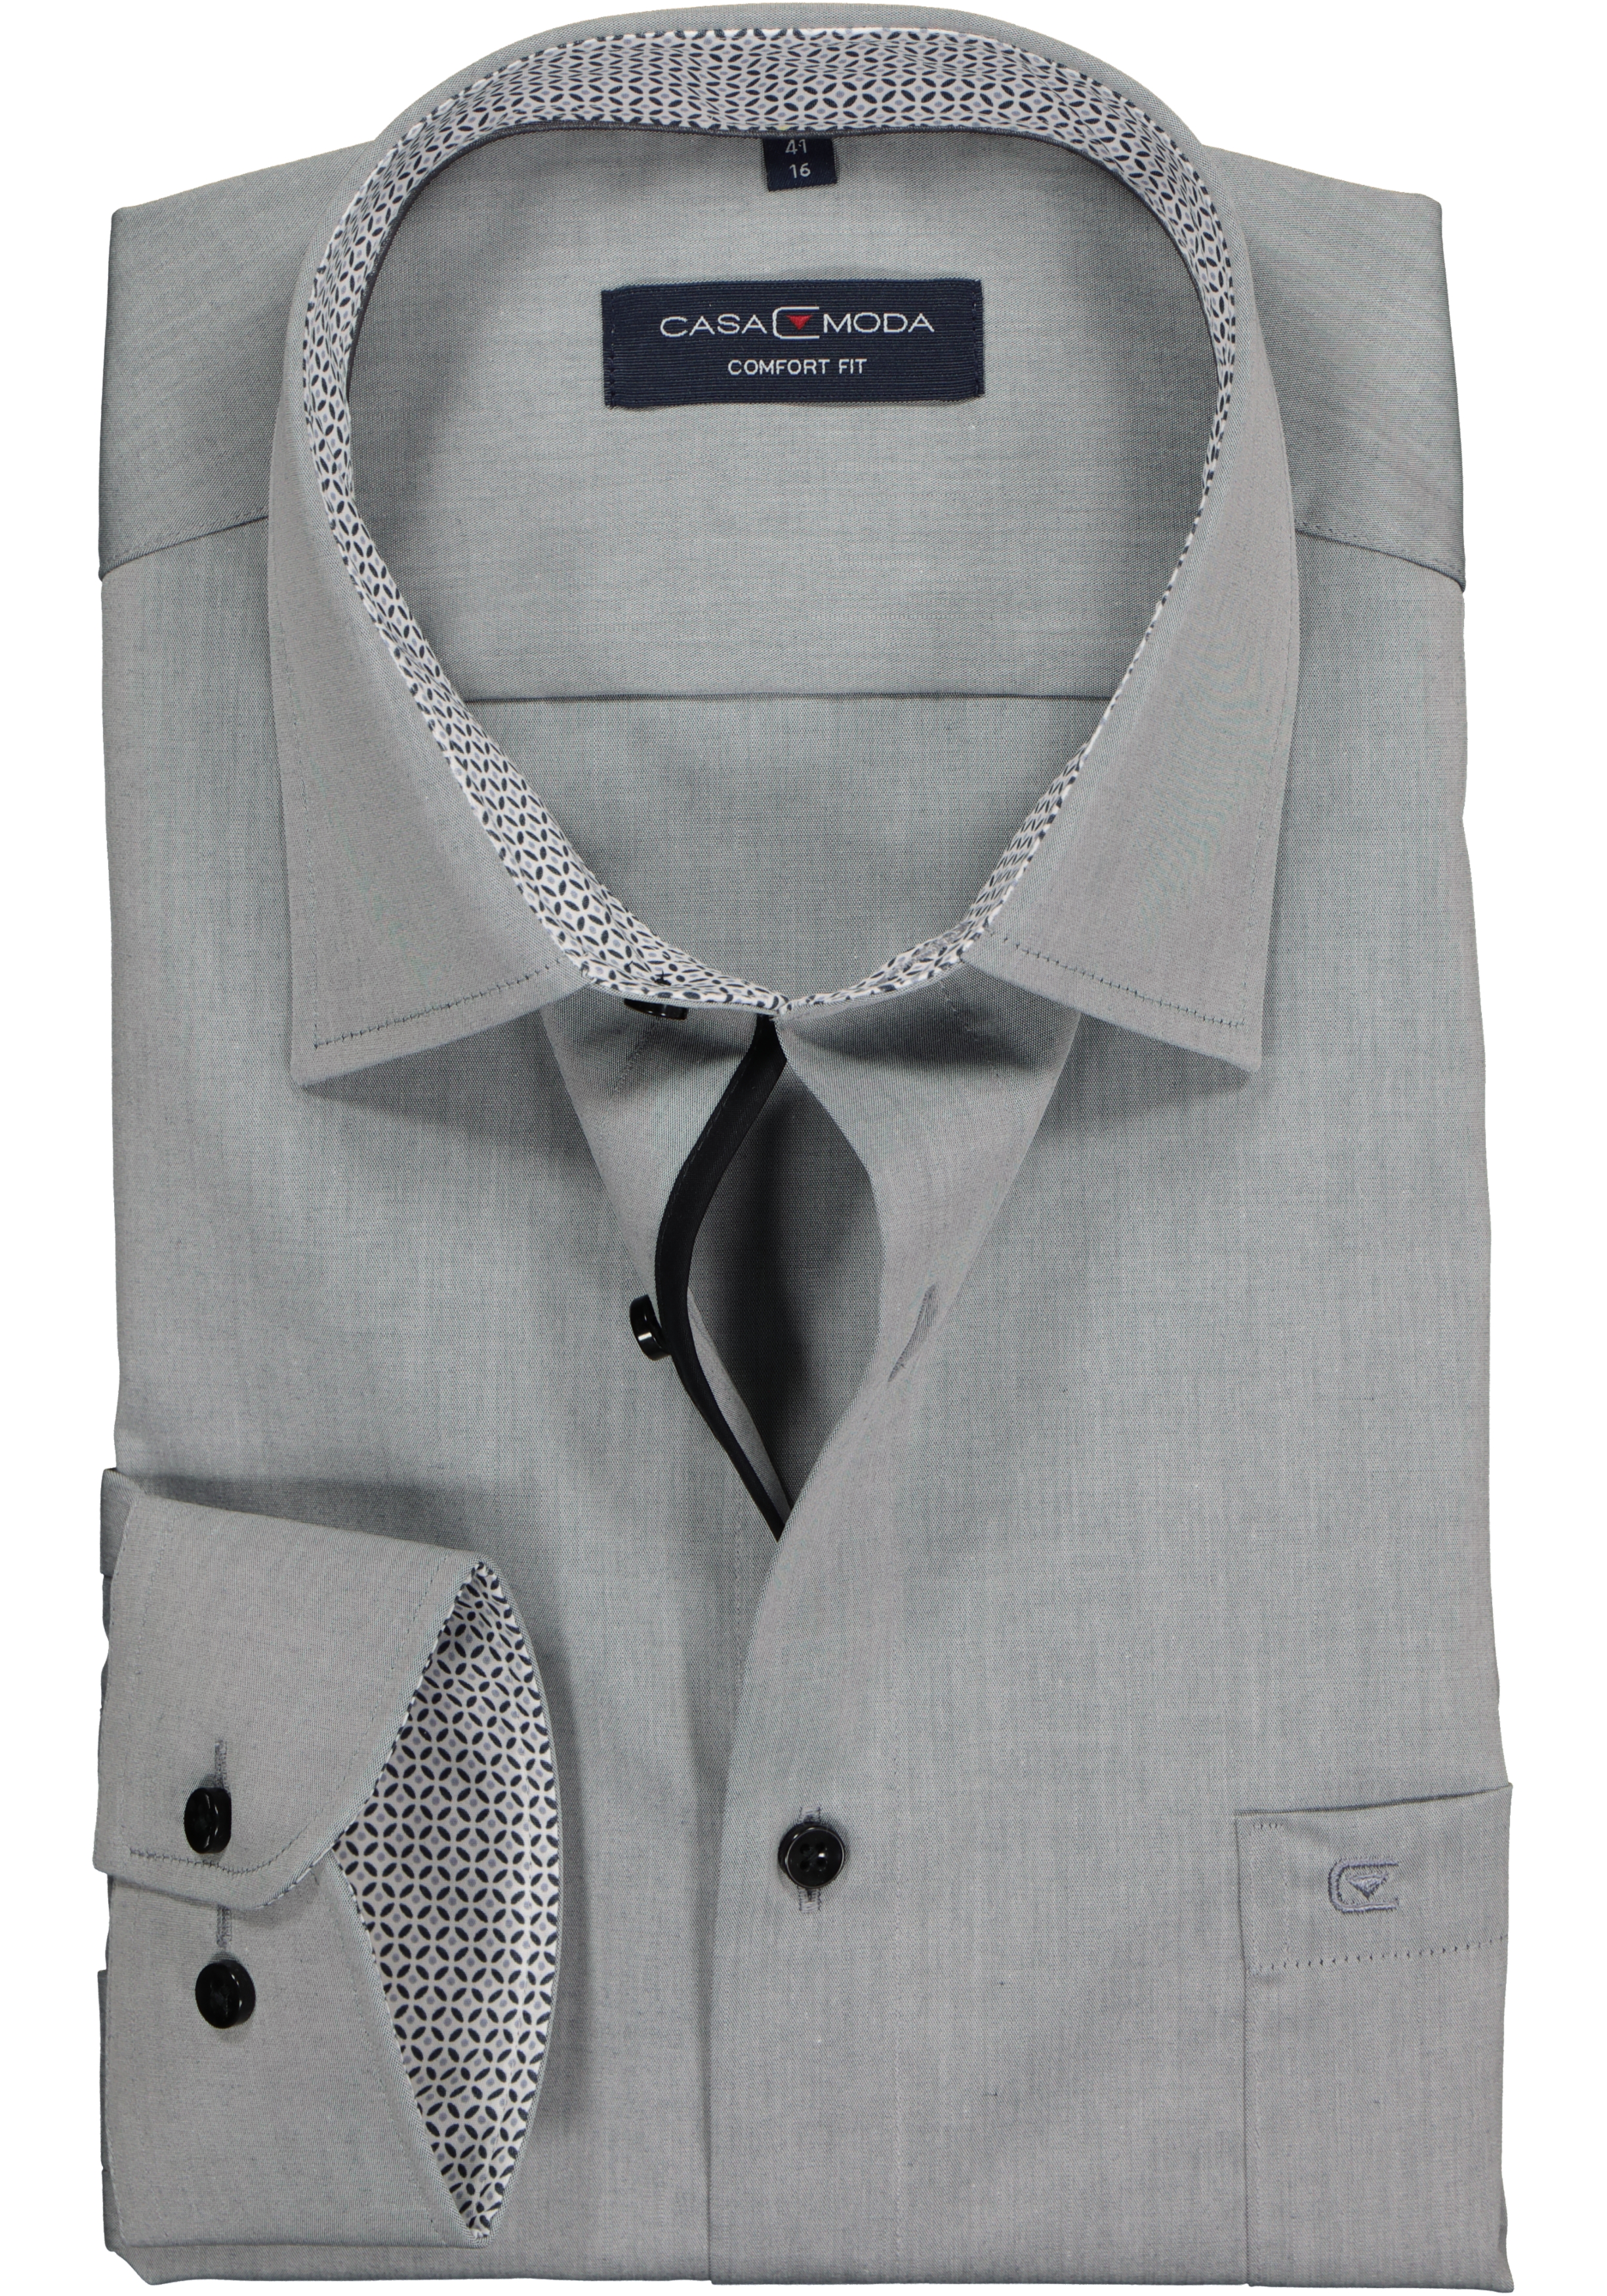 CASA MODA comfort fit overhemd, grijs (contrast)